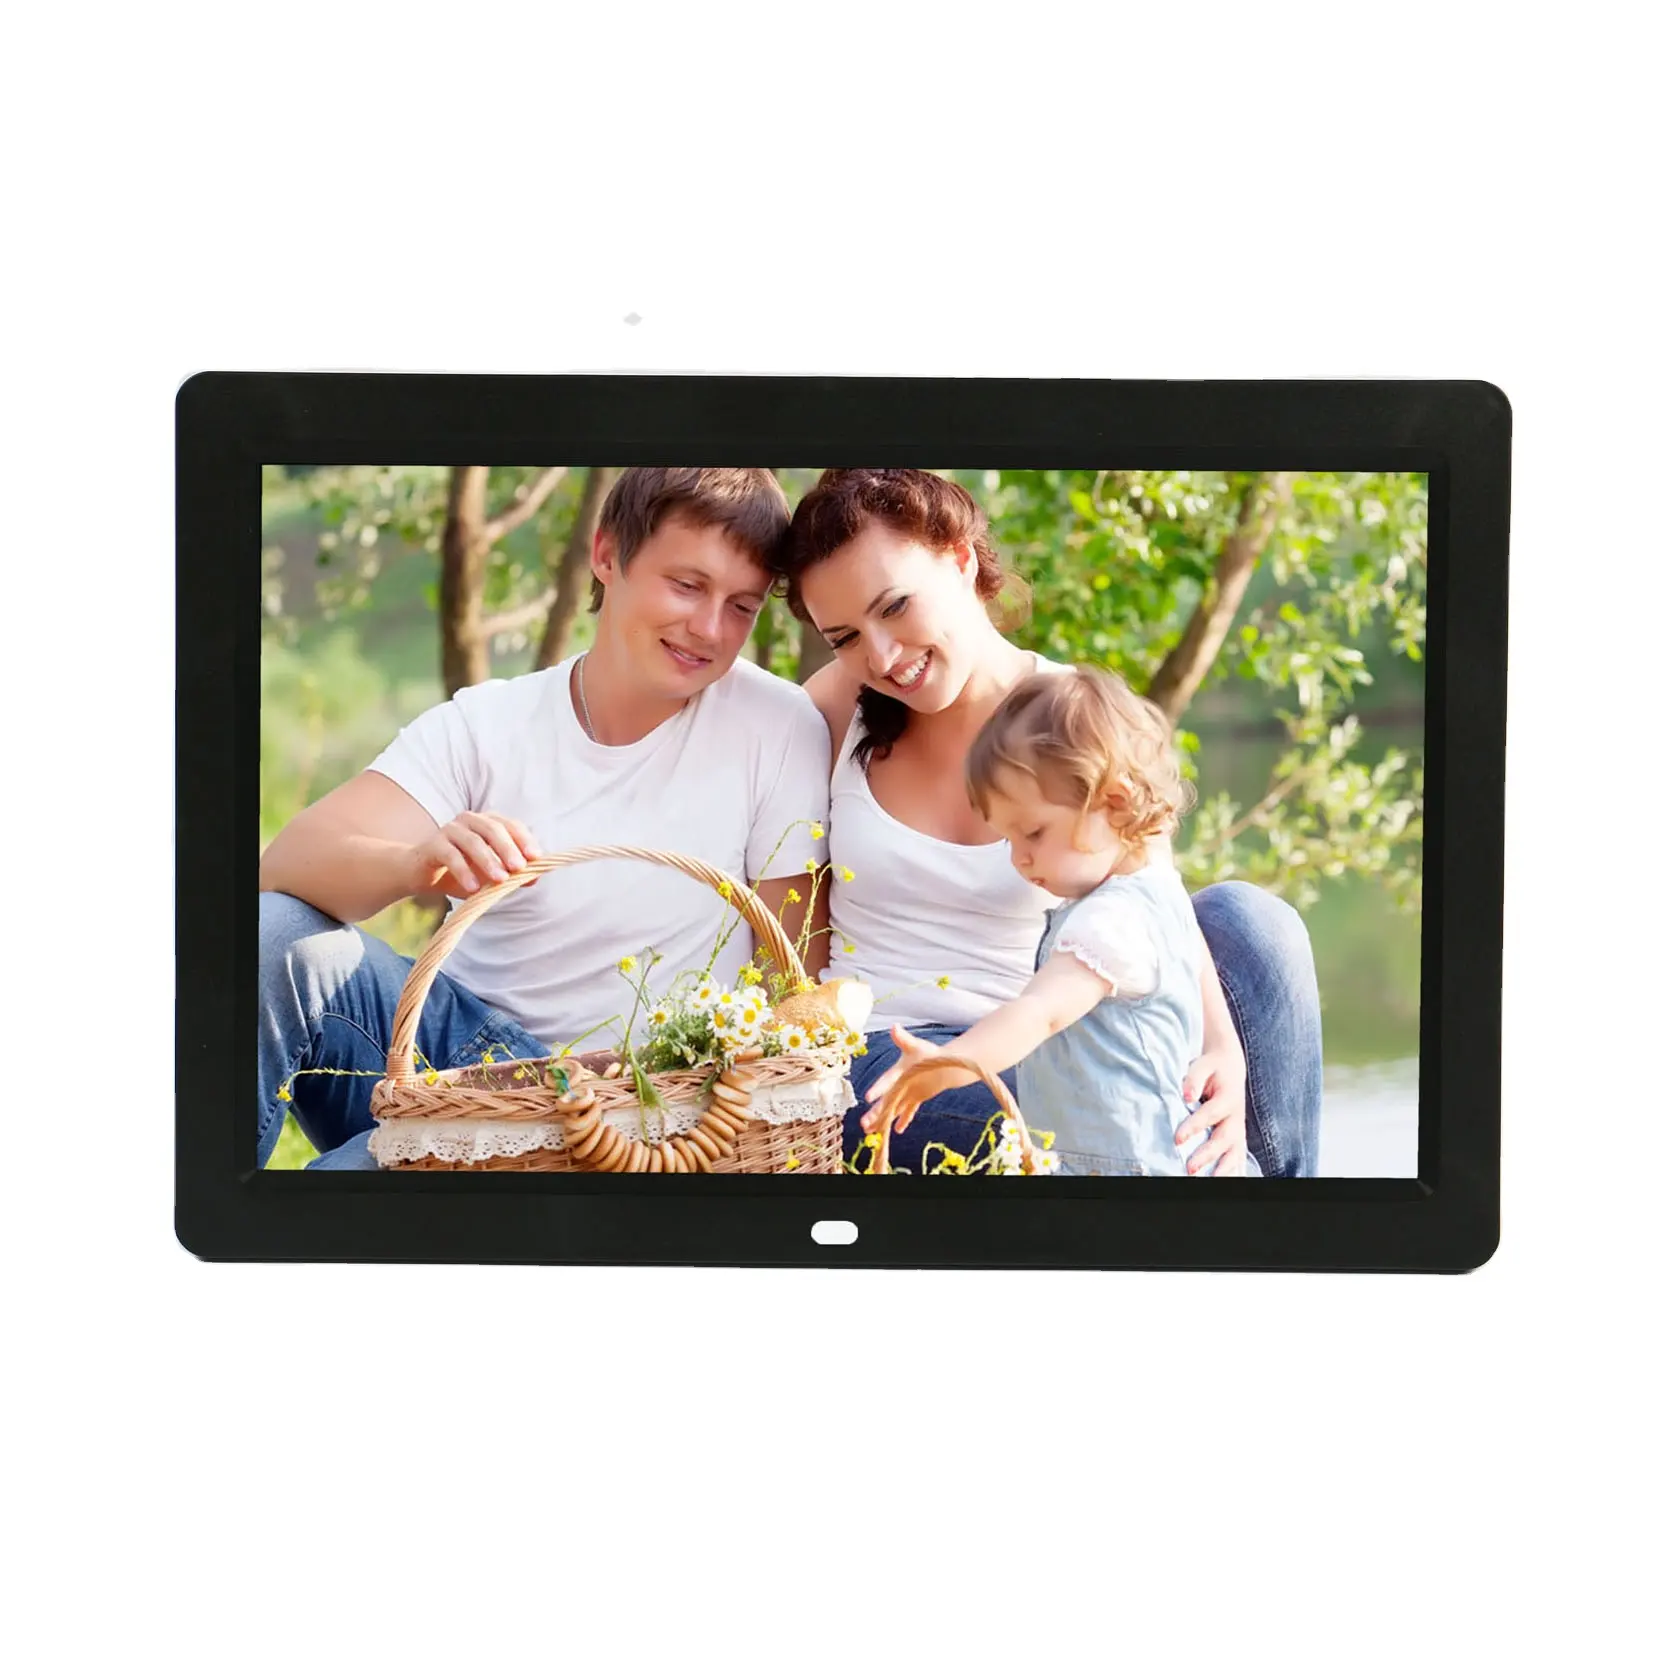 12.1 "polegadas widescreen LCD monitor de vídeo player multimídia suporte HD 1080 p e paisagem/retrato exibir o modo completo viewangle